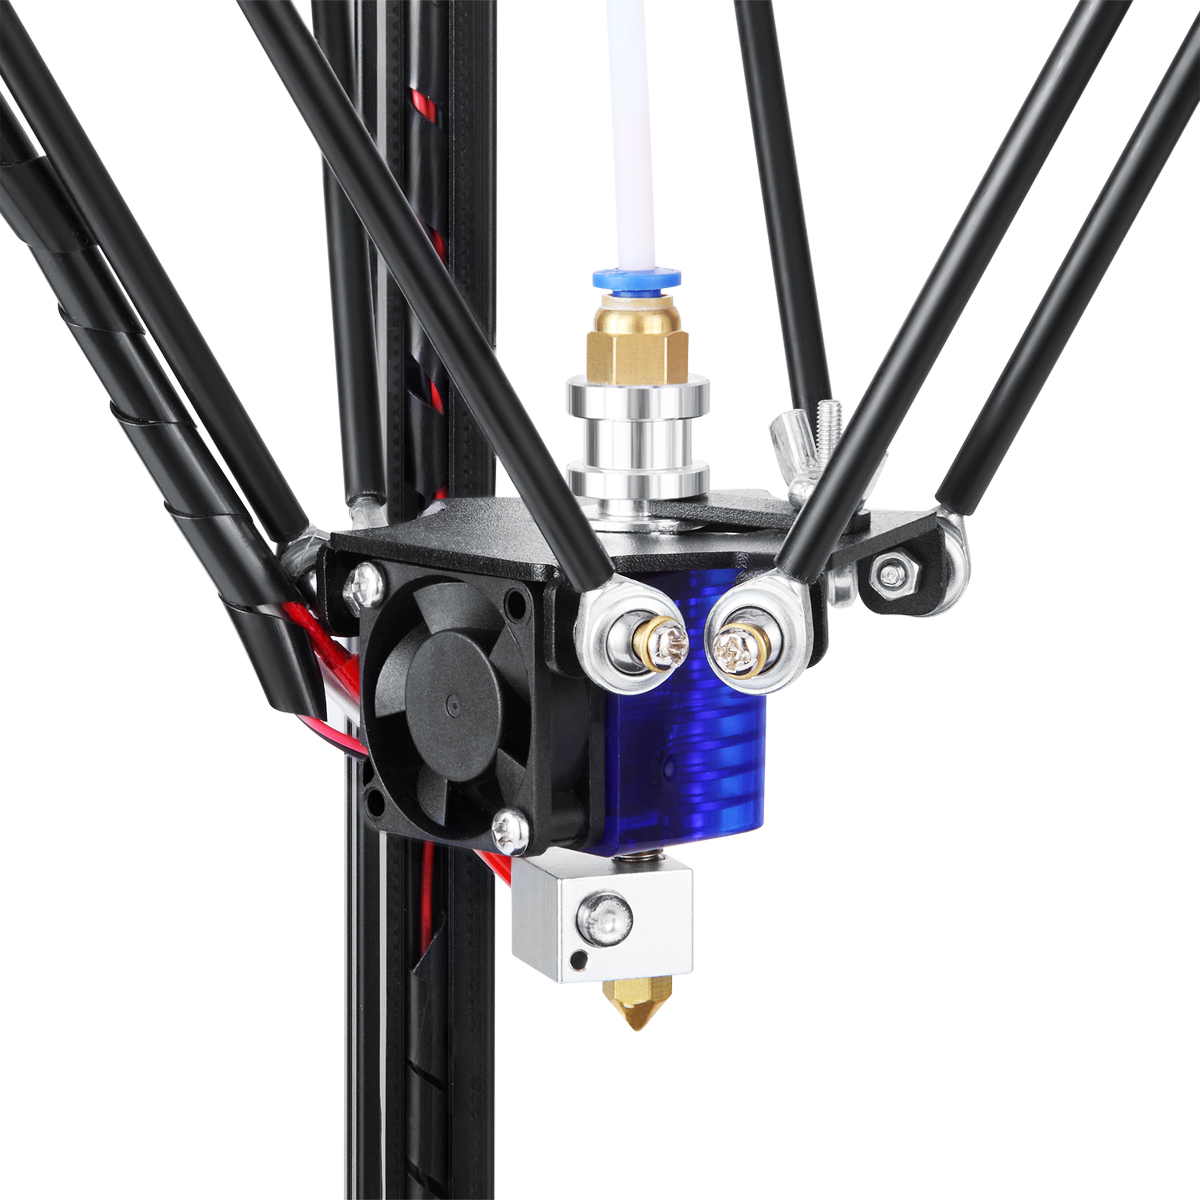 EZT® T1-M+L Delta Kossel 3D Printer DIY Kit 300*320mm Large Printer Size With Laser Engraving/1KG Filament Support Intelligent Leveing/Auto Change Fil 12